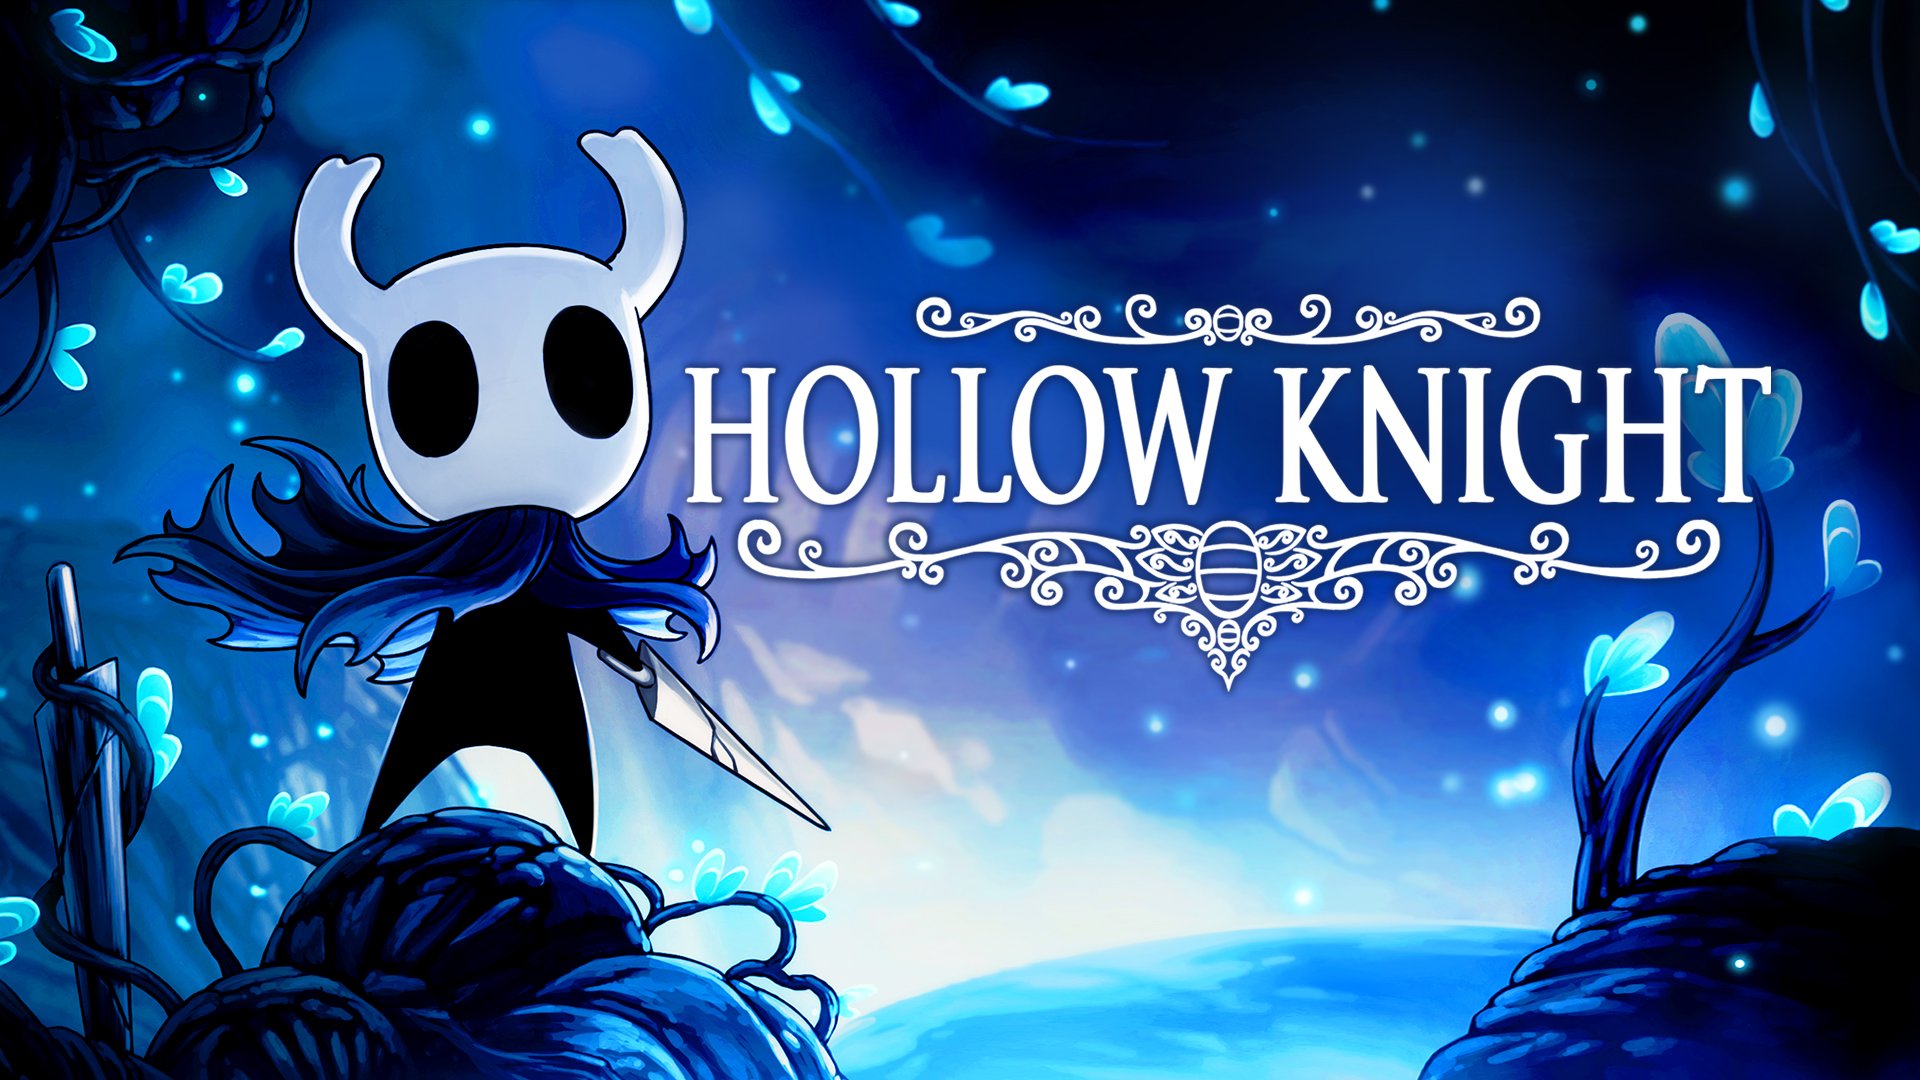 Amazoncom Hollow Knight   Nintendo Switch [Digital Code] Video